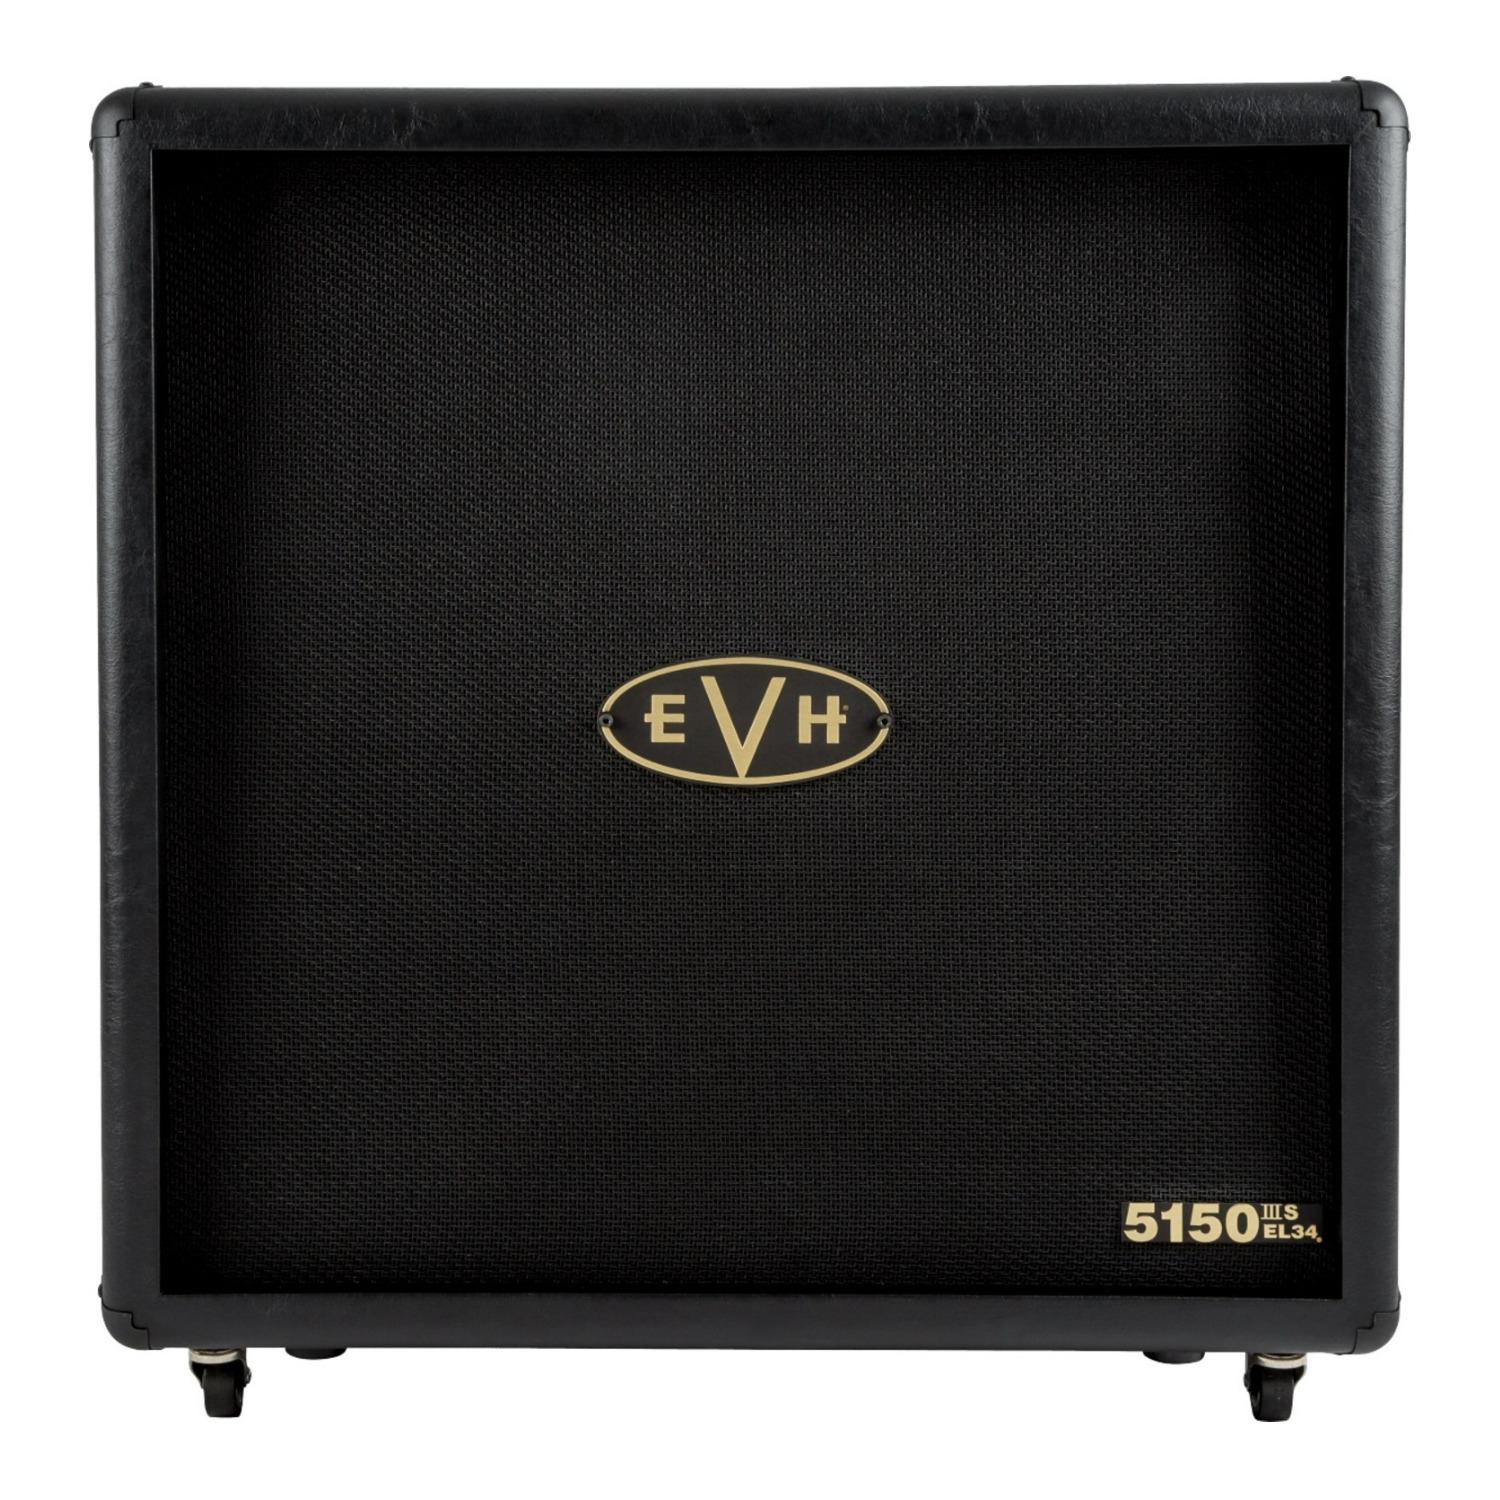 EVH 5150IIIS EL34 412ST 100W Straight-Front 4x12-Inch Celestion Speakers Extension Cabinet in Black -  2252160000